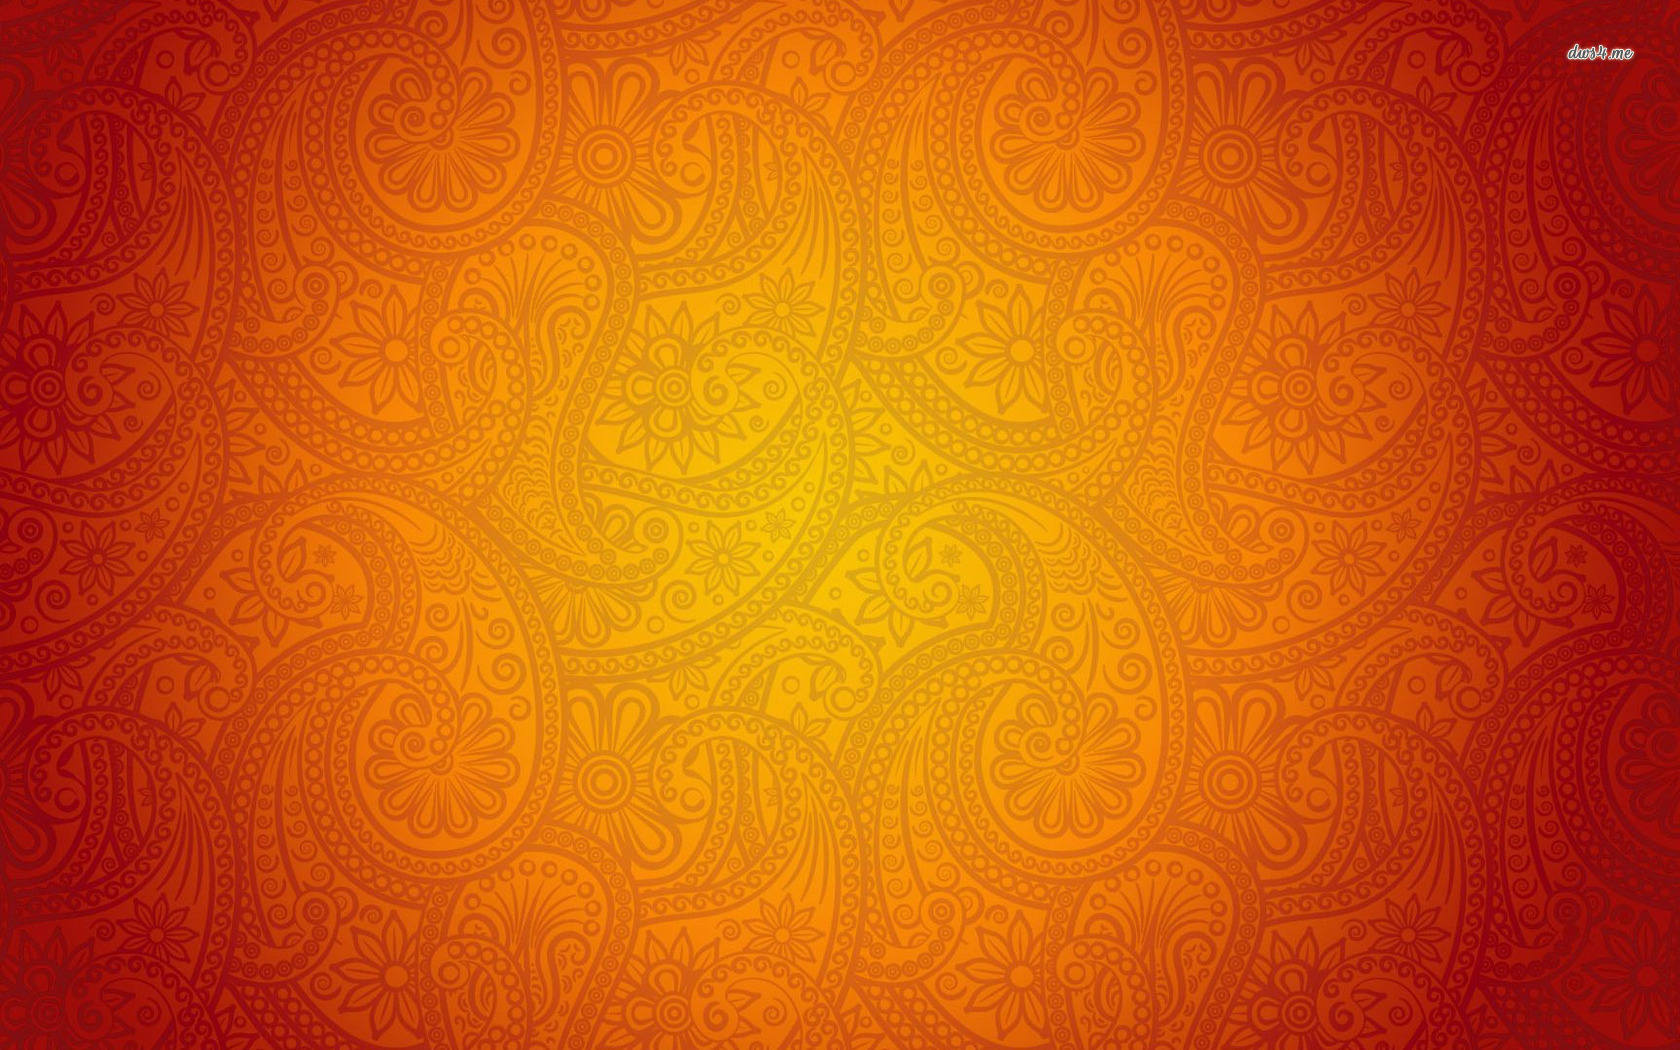 Free download Neon Orange Abstract Backgrounds wwwpixsharkcom [1680x1050]  for your Desktop, Mobile & Tablet | Explore 77+ Neon Orange Backgrounds |  Neon Wallpapers, Orange Backgrounds, Neon Backgrounds